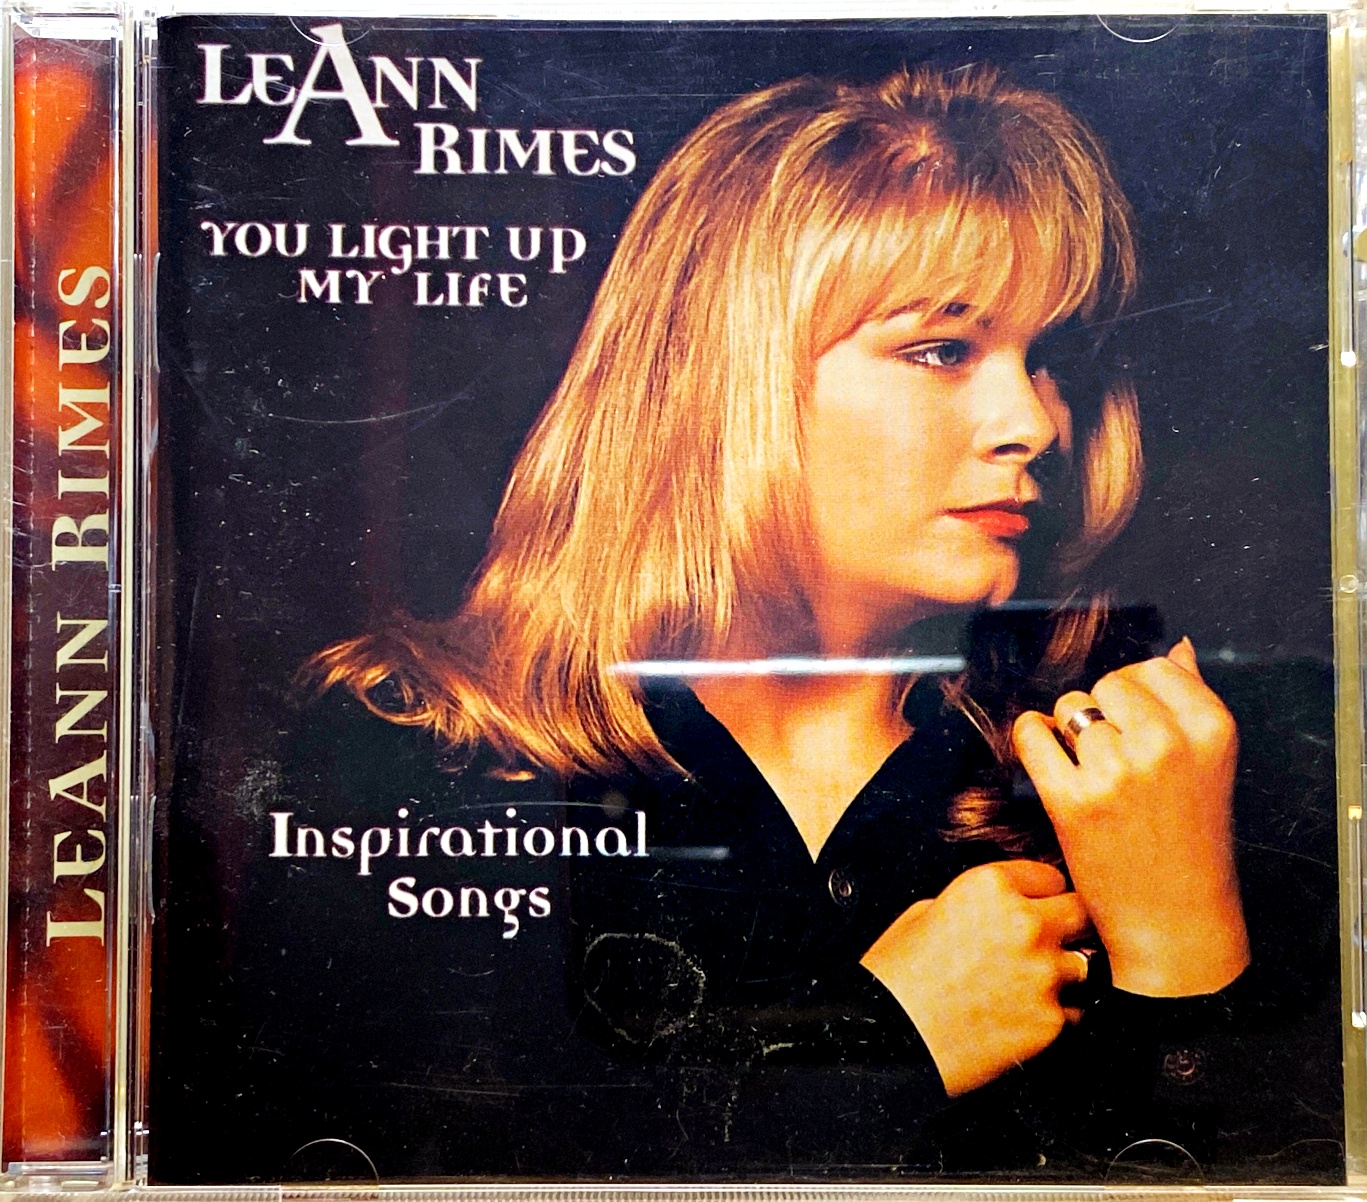 CD LeAnn Rimes – You Light Up My Life (Inspirational Songs)